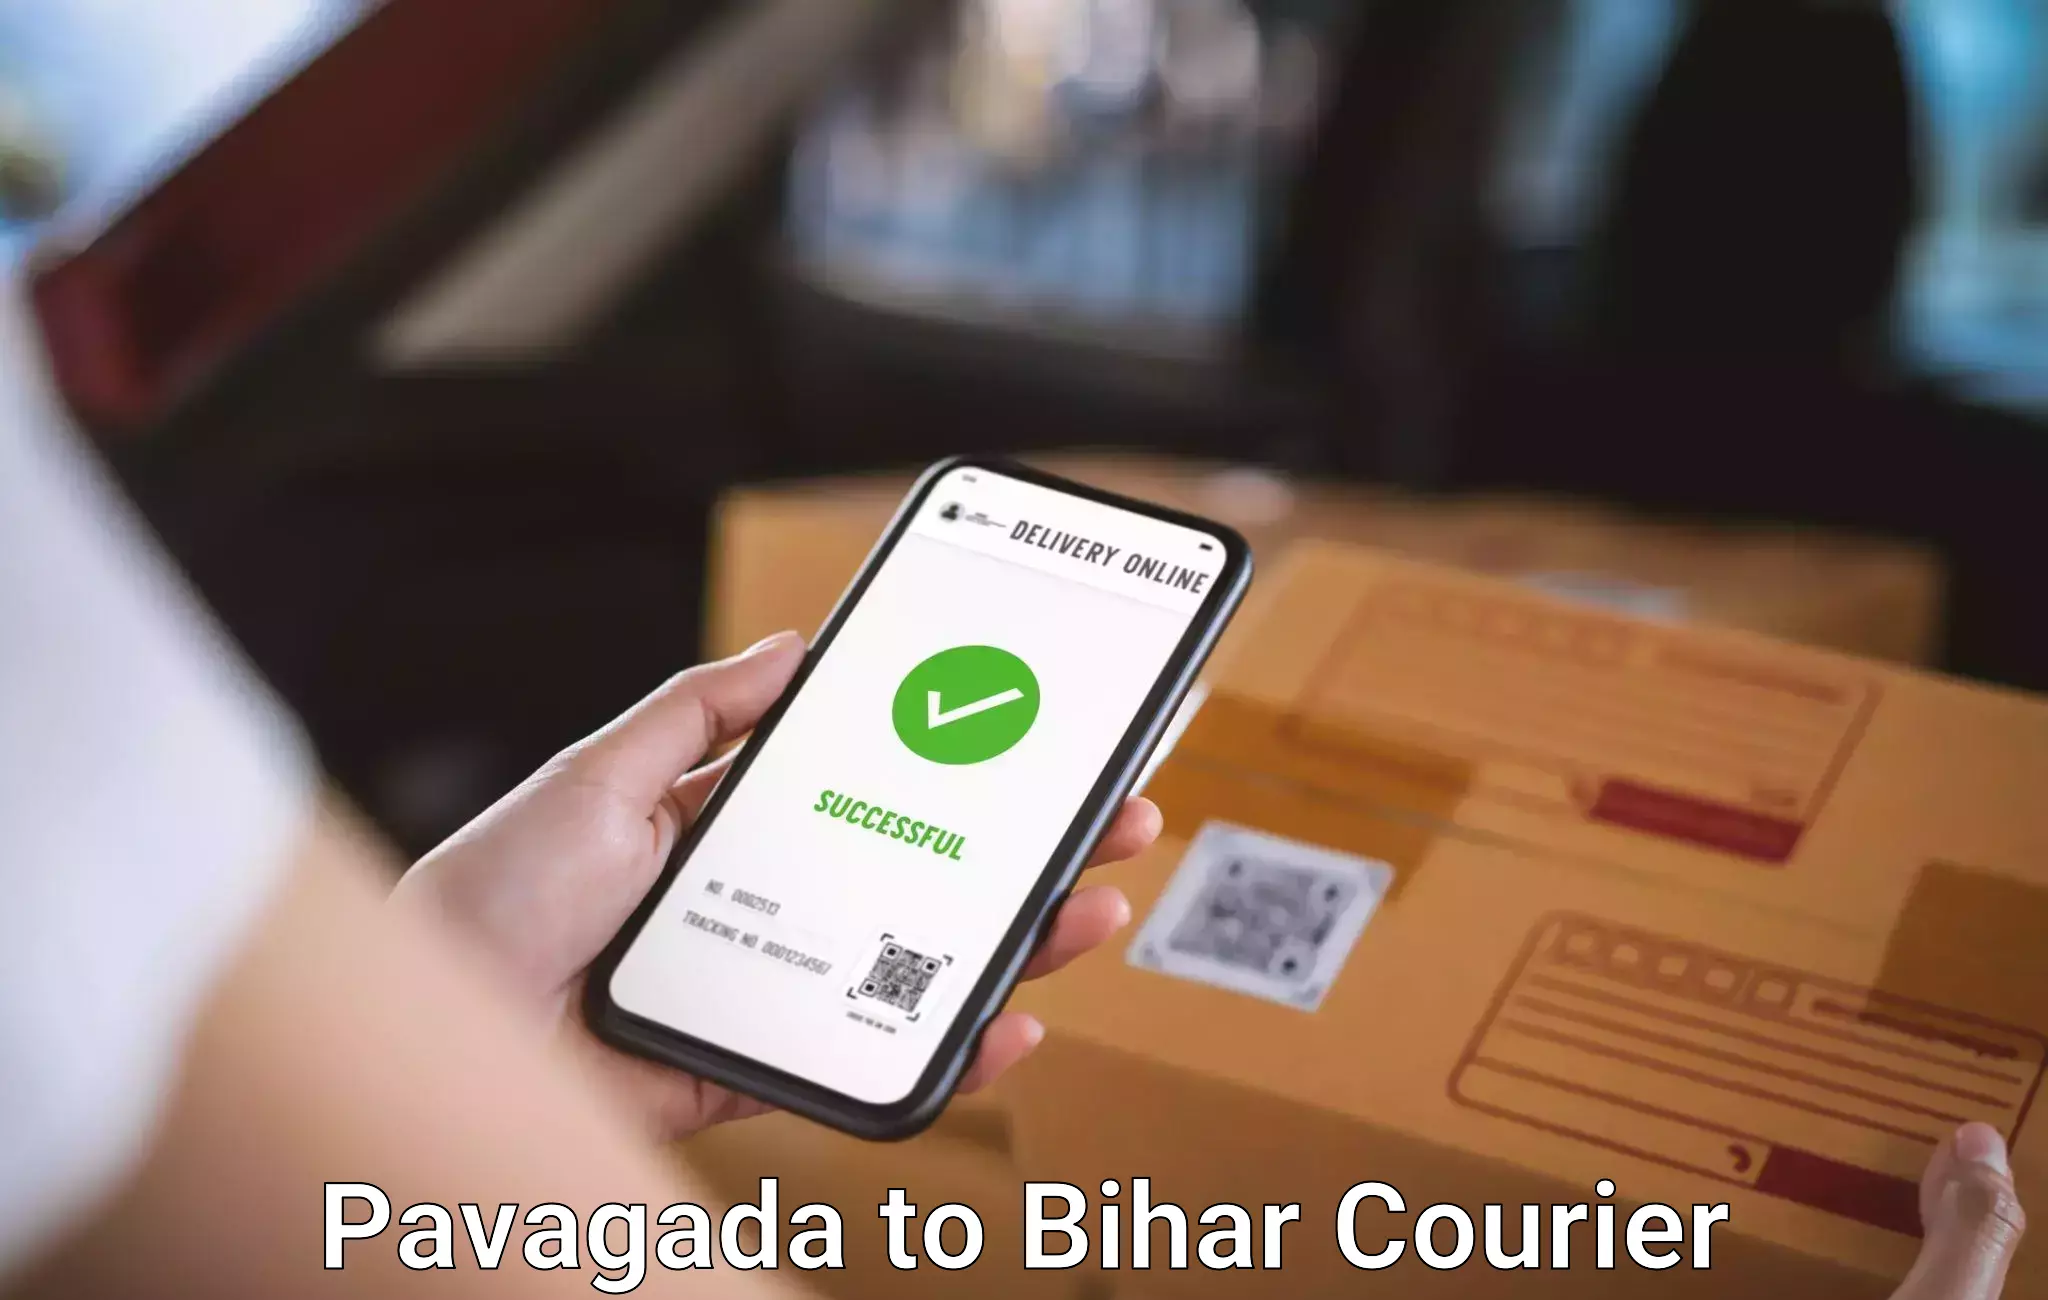 Baggage transport professionals Pavagada to Bihar